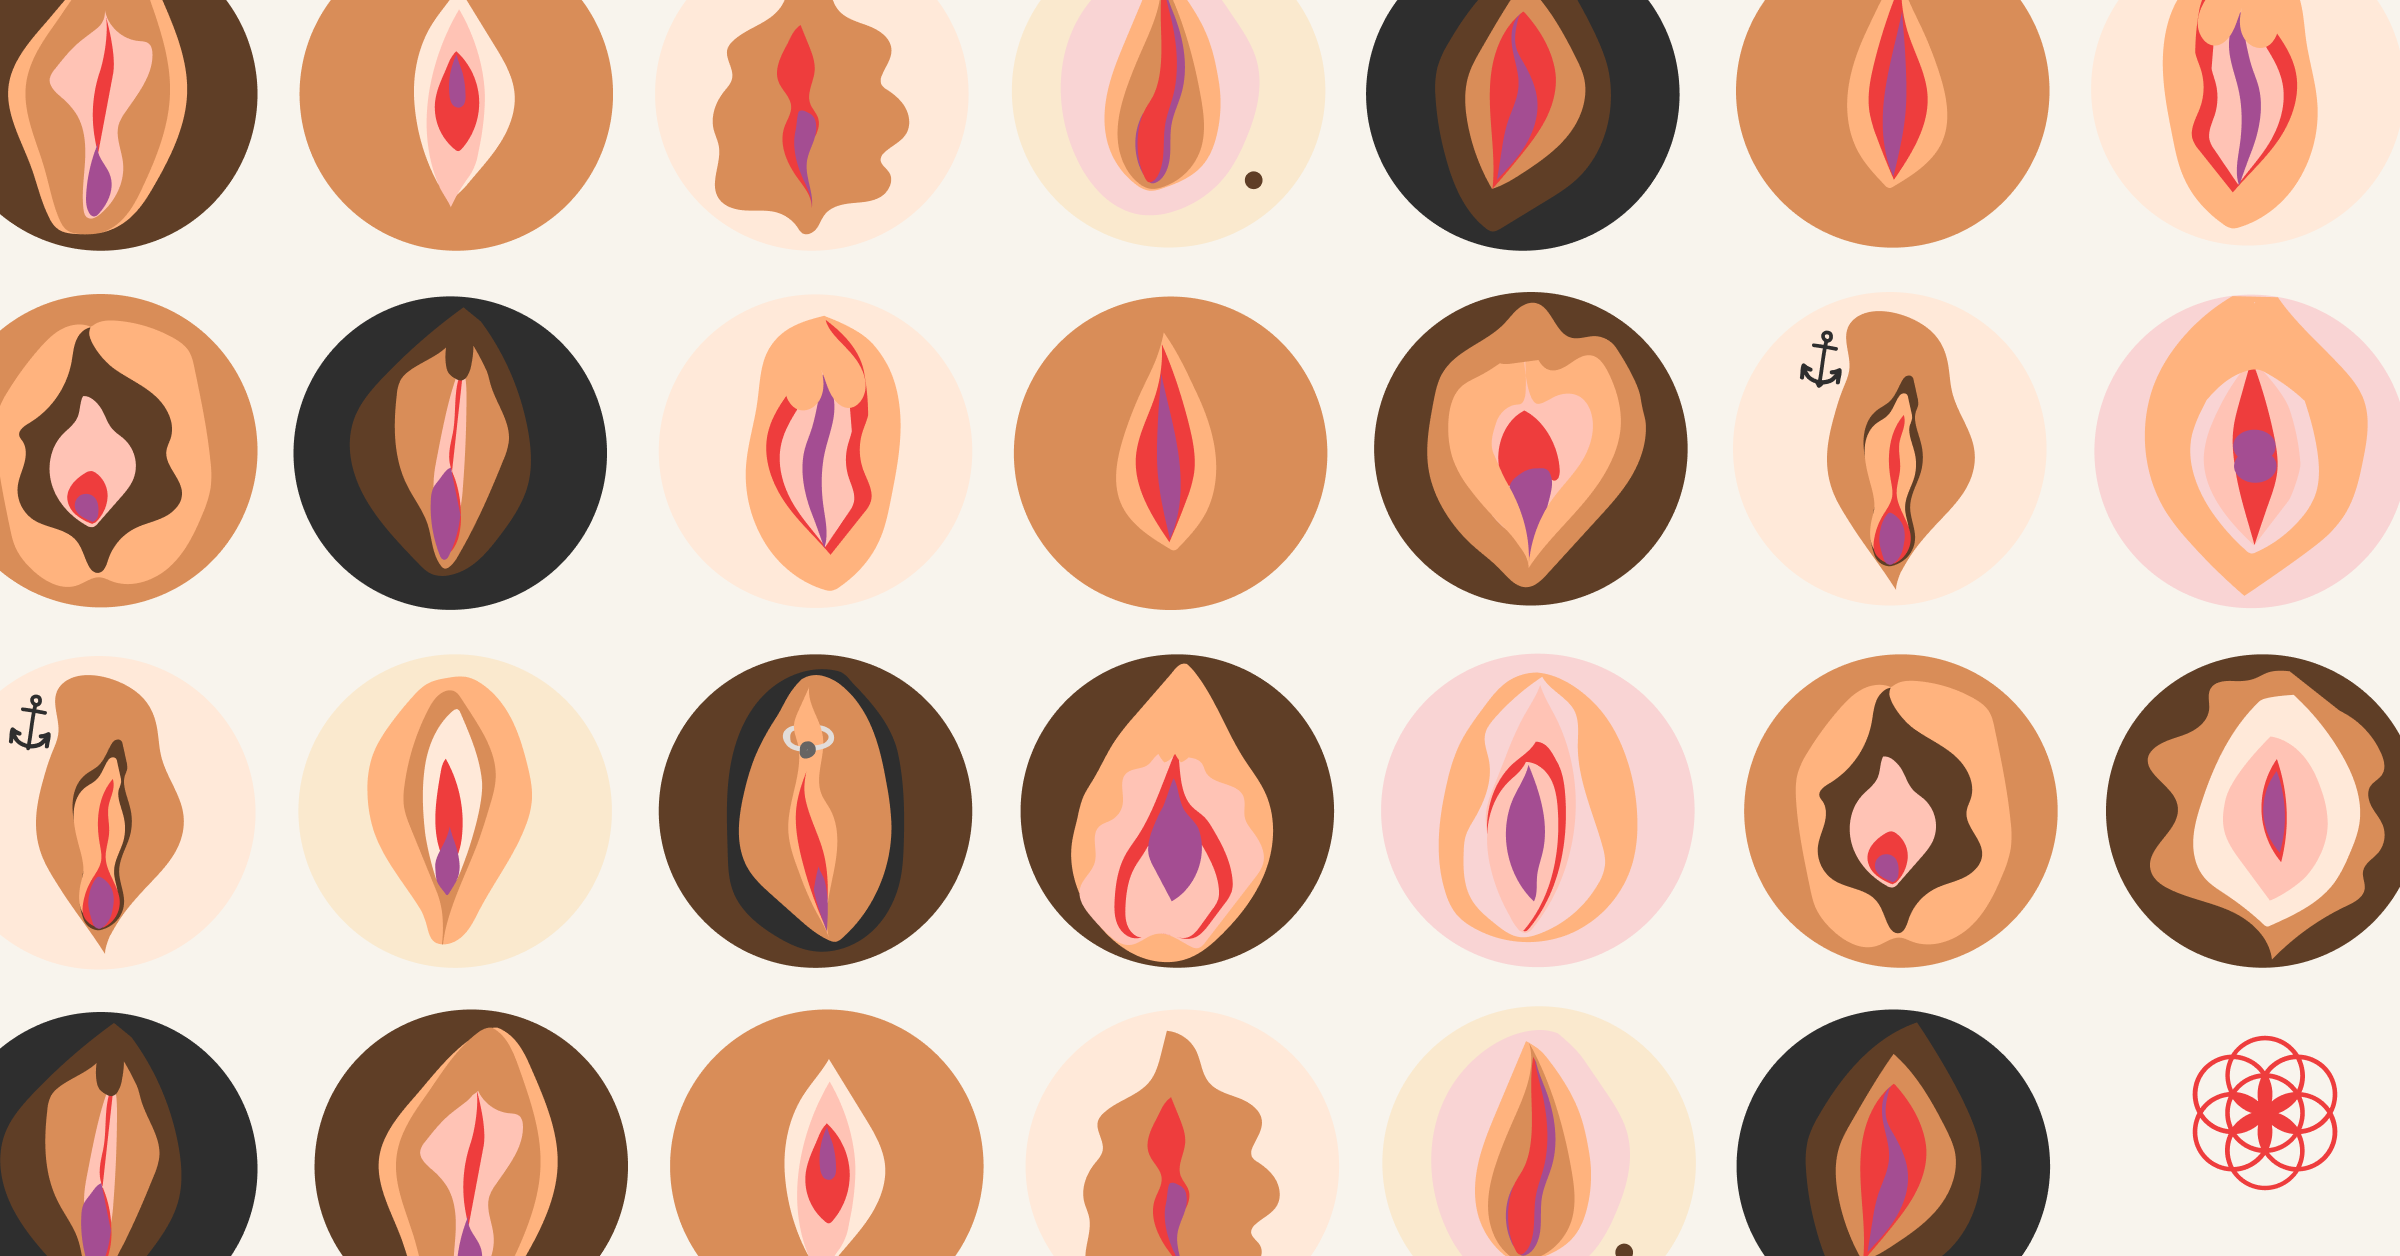 Different Types Of Vaginas